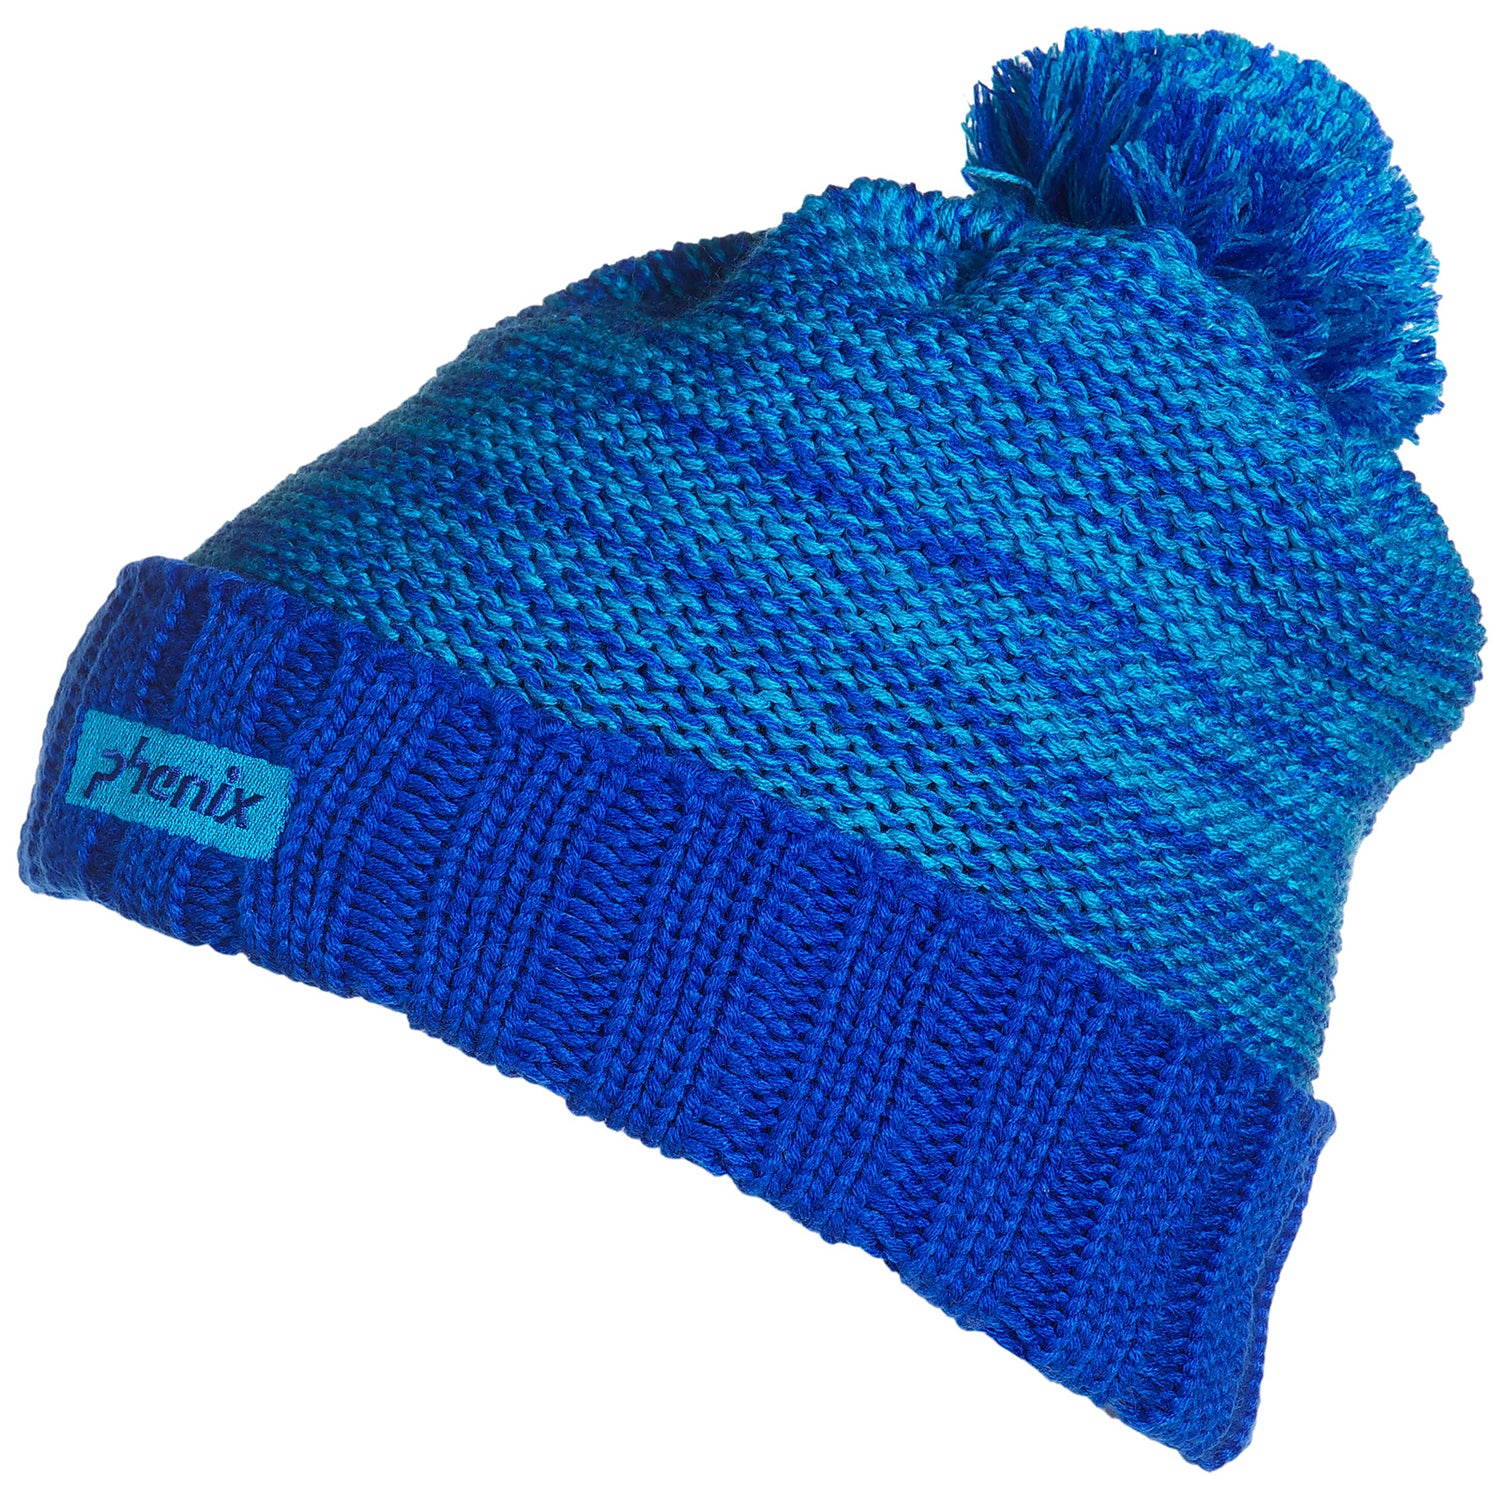 Phenix Groovy Jnr Knit Hat 2016 Blue